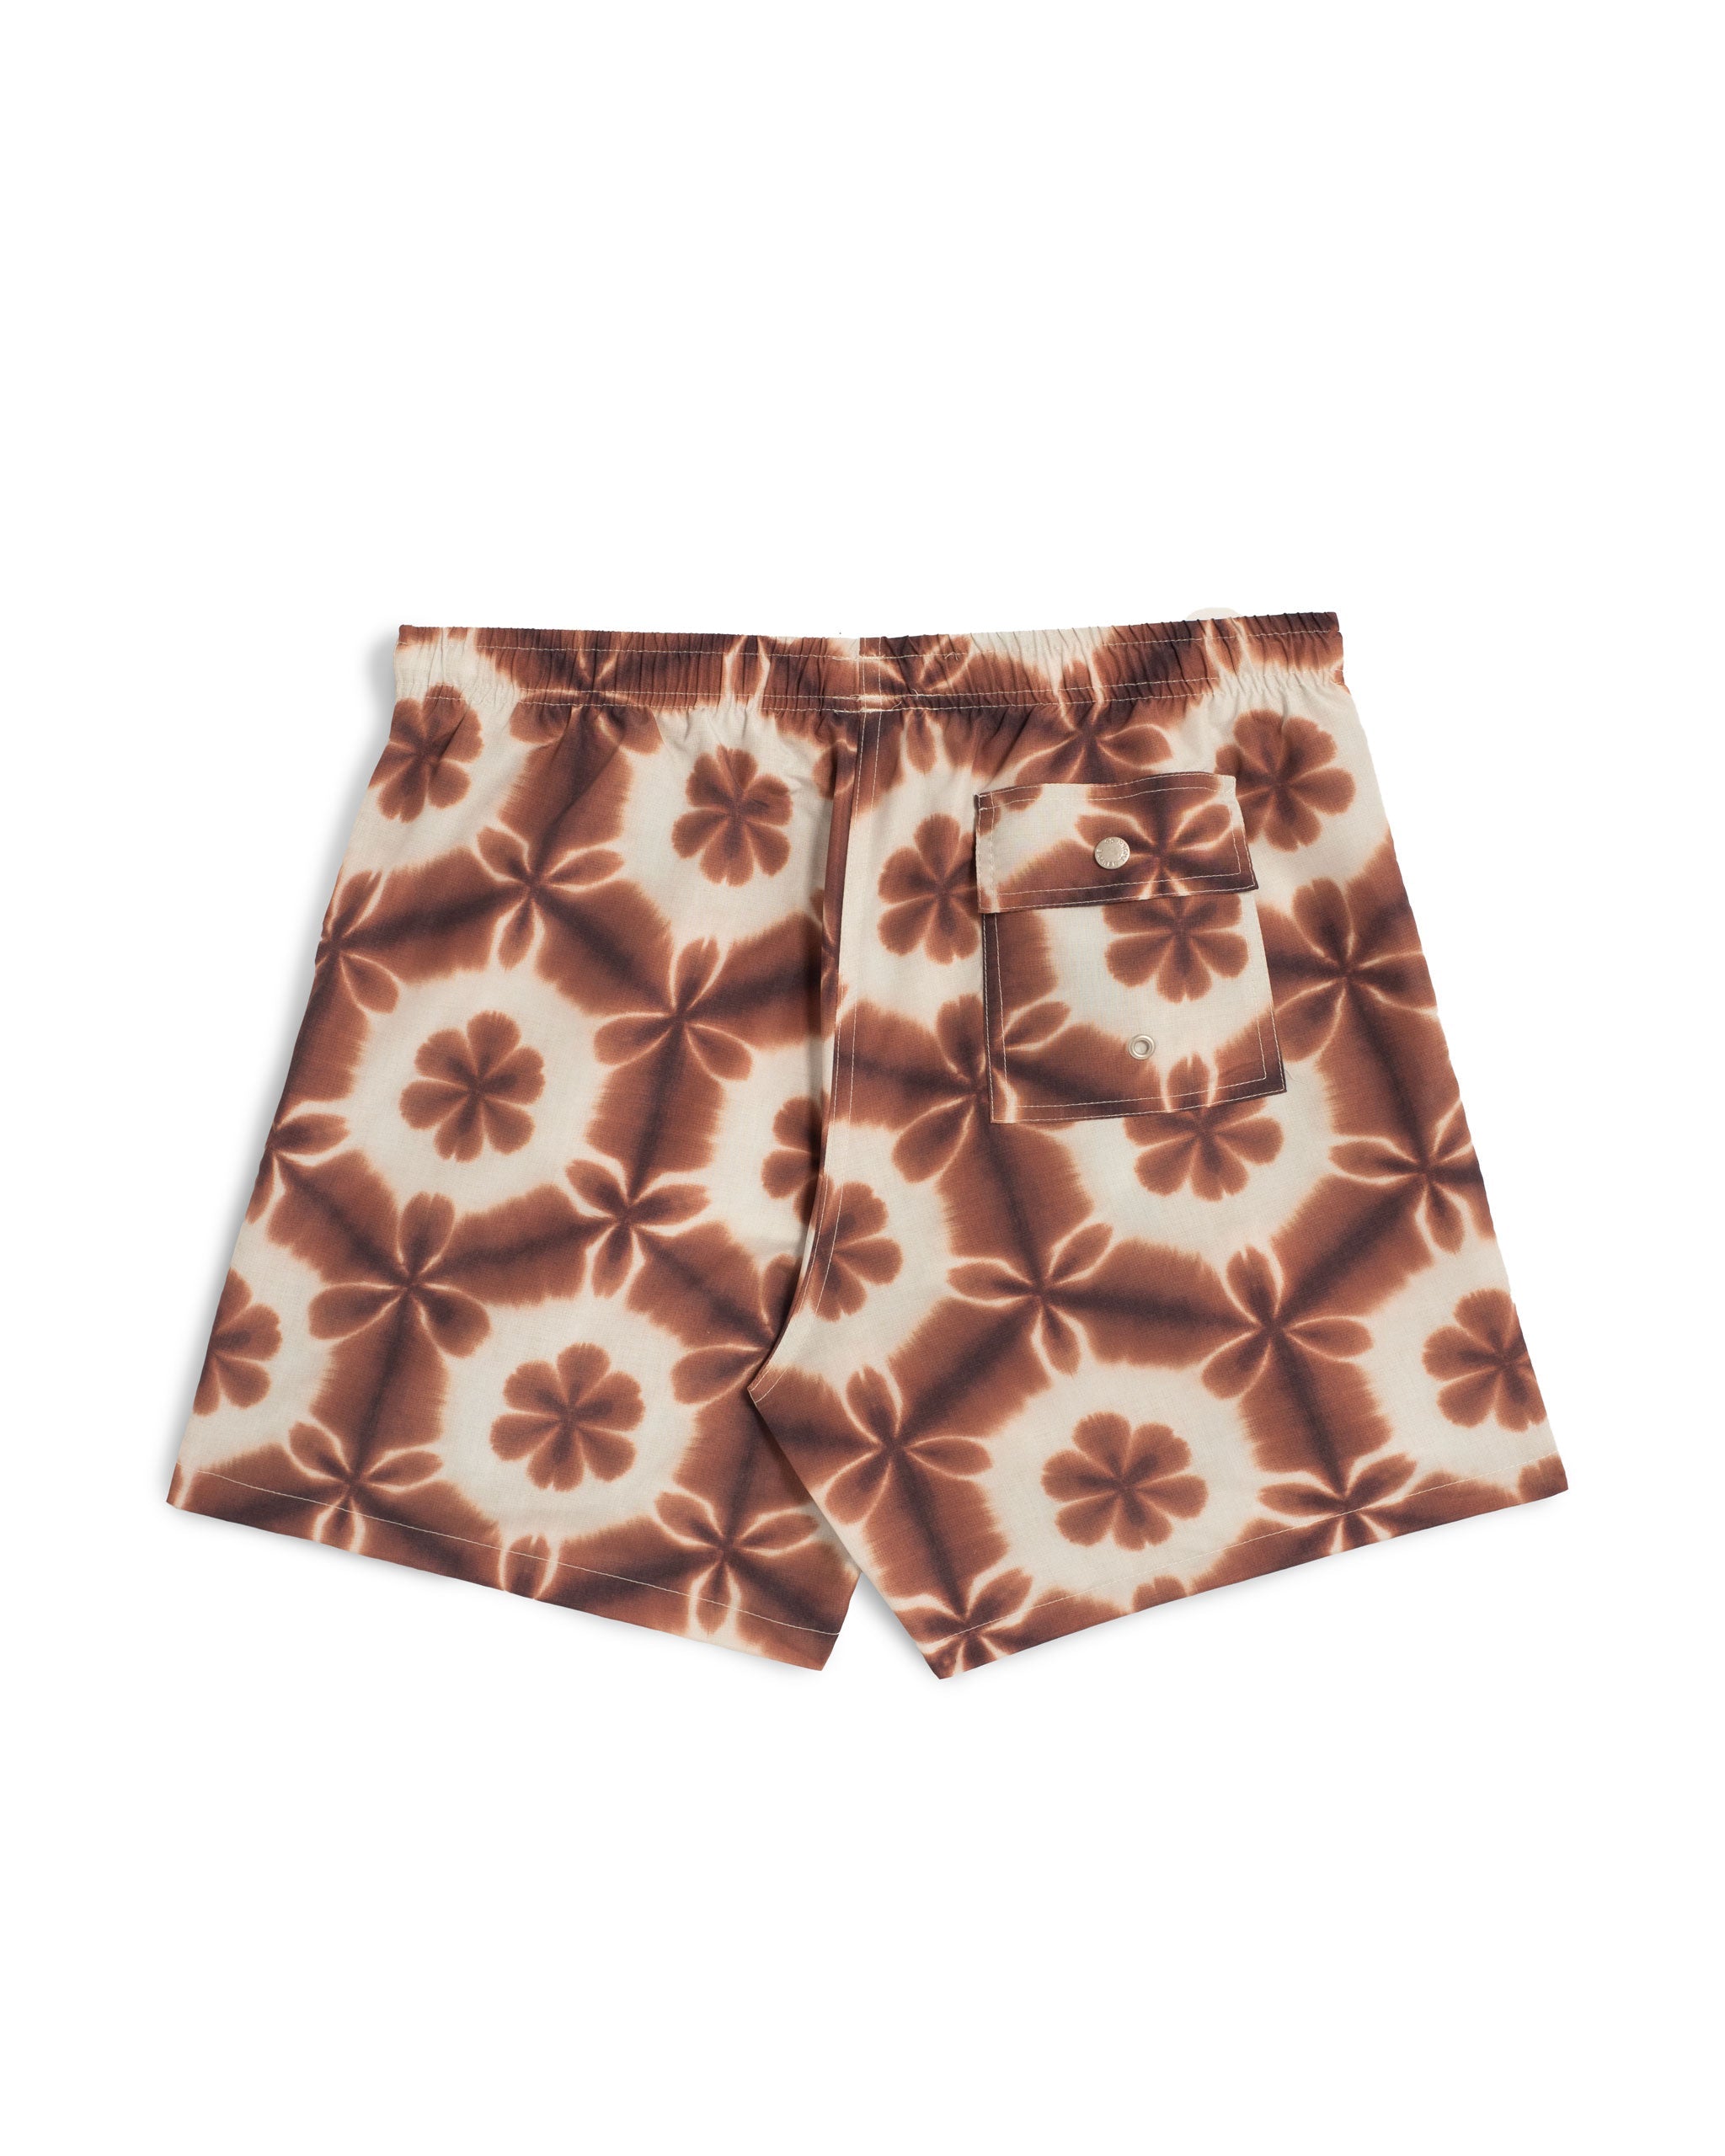 back shot of Brown swim trunk with a shibori-inspired print that looks like a kaleidoscope pattern